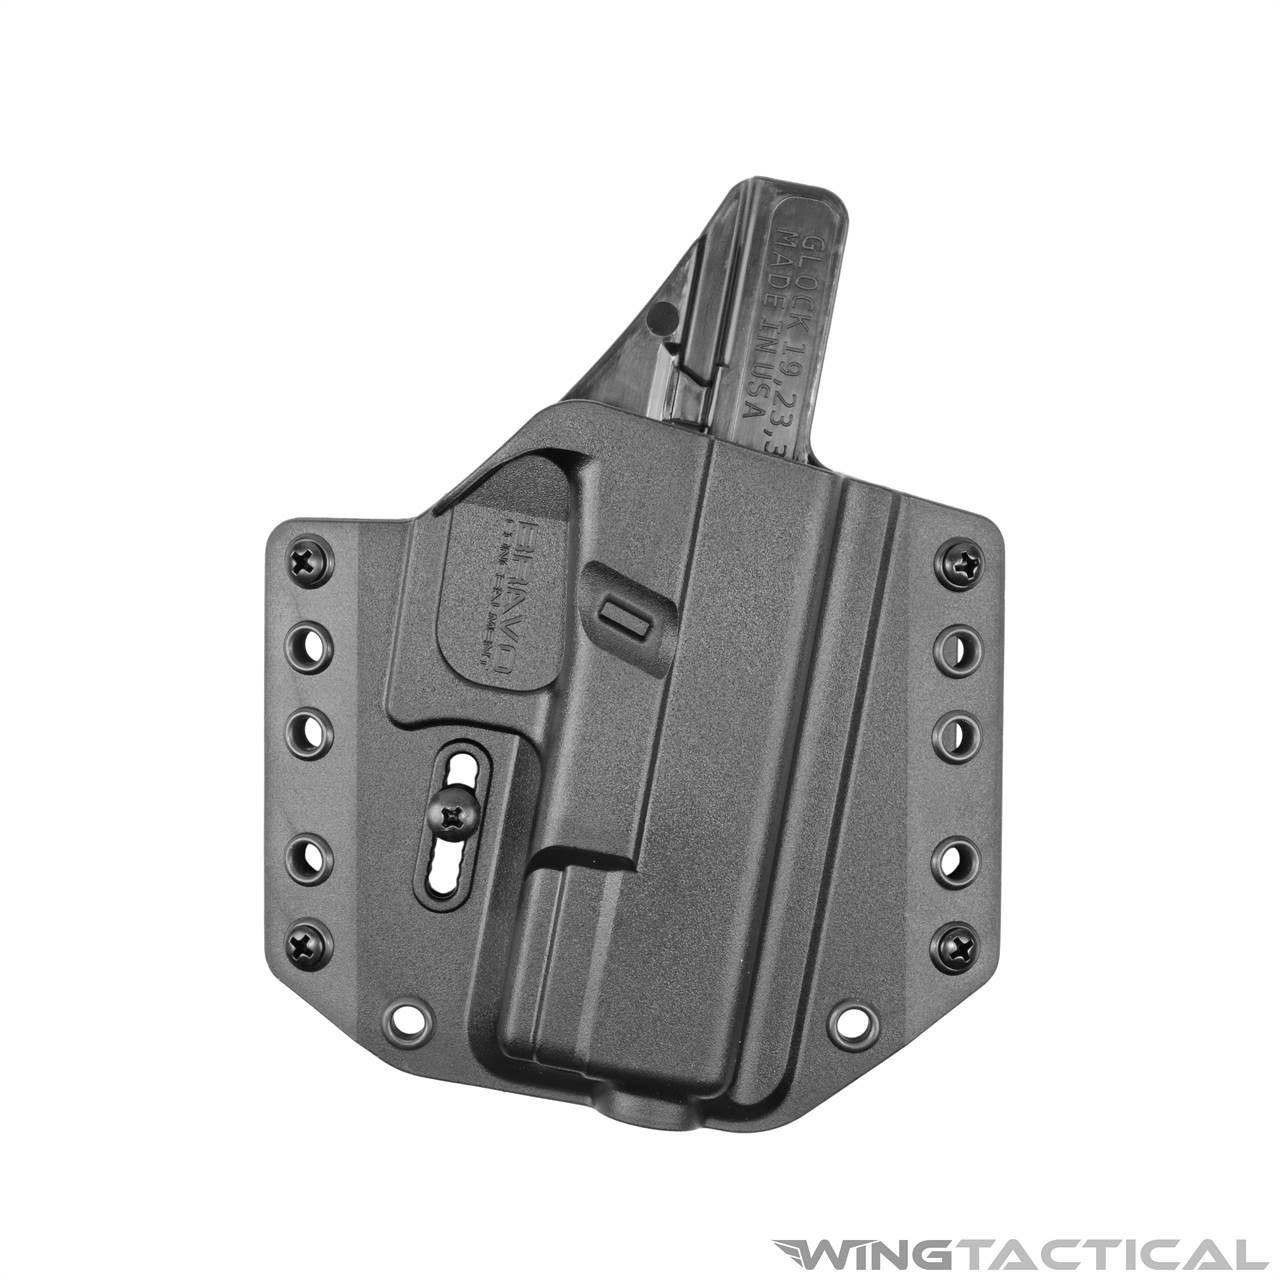 OWB Concealment Holster for Glock 19 MOS– Bravo Concealment